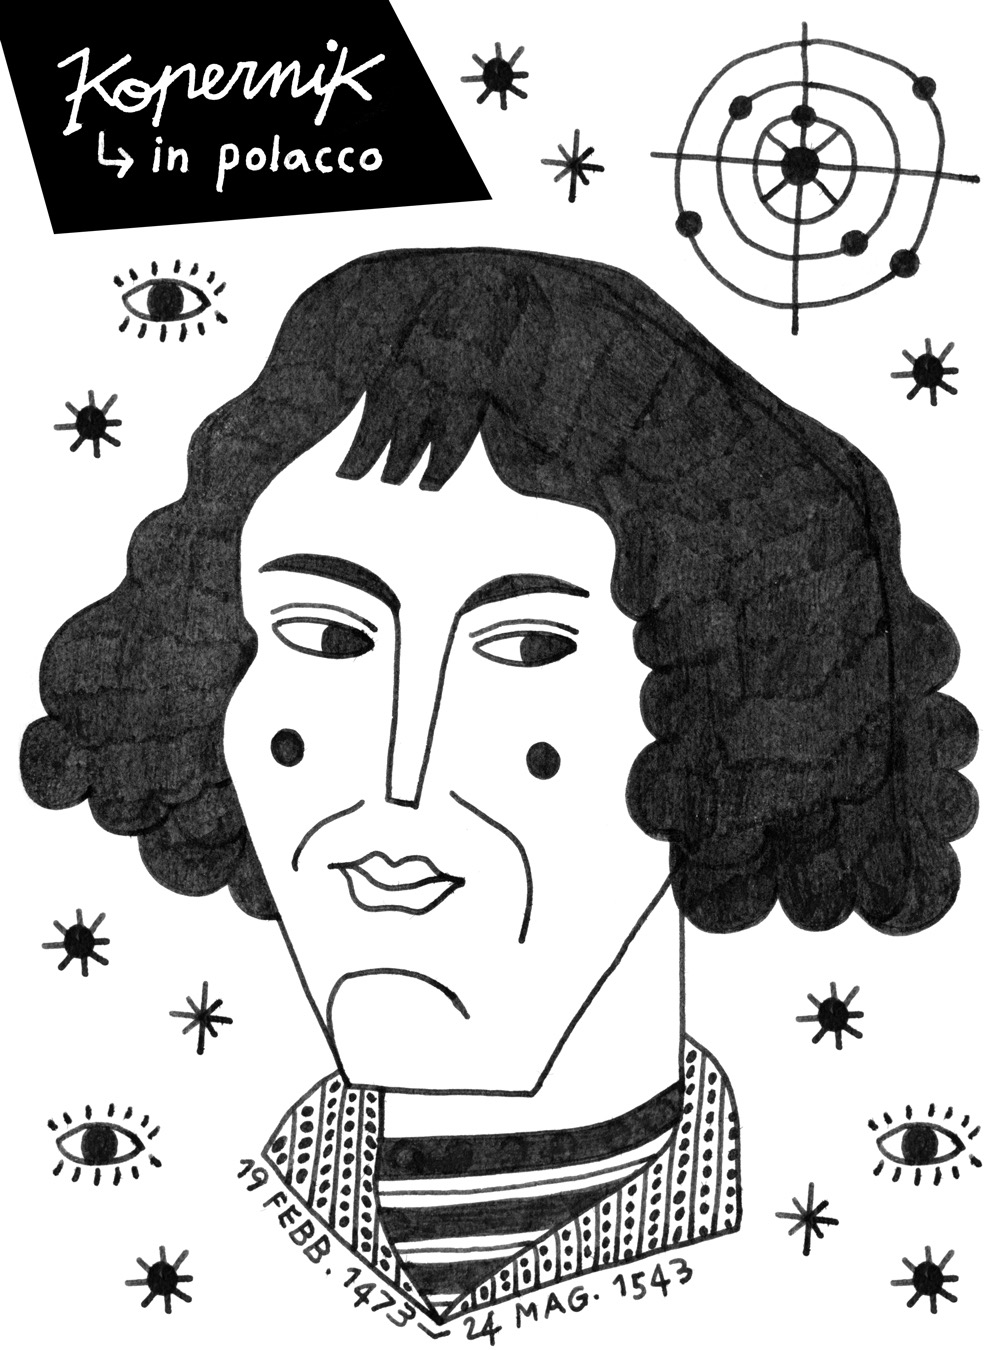 Niccolò Copernico © Pamela Cocconi